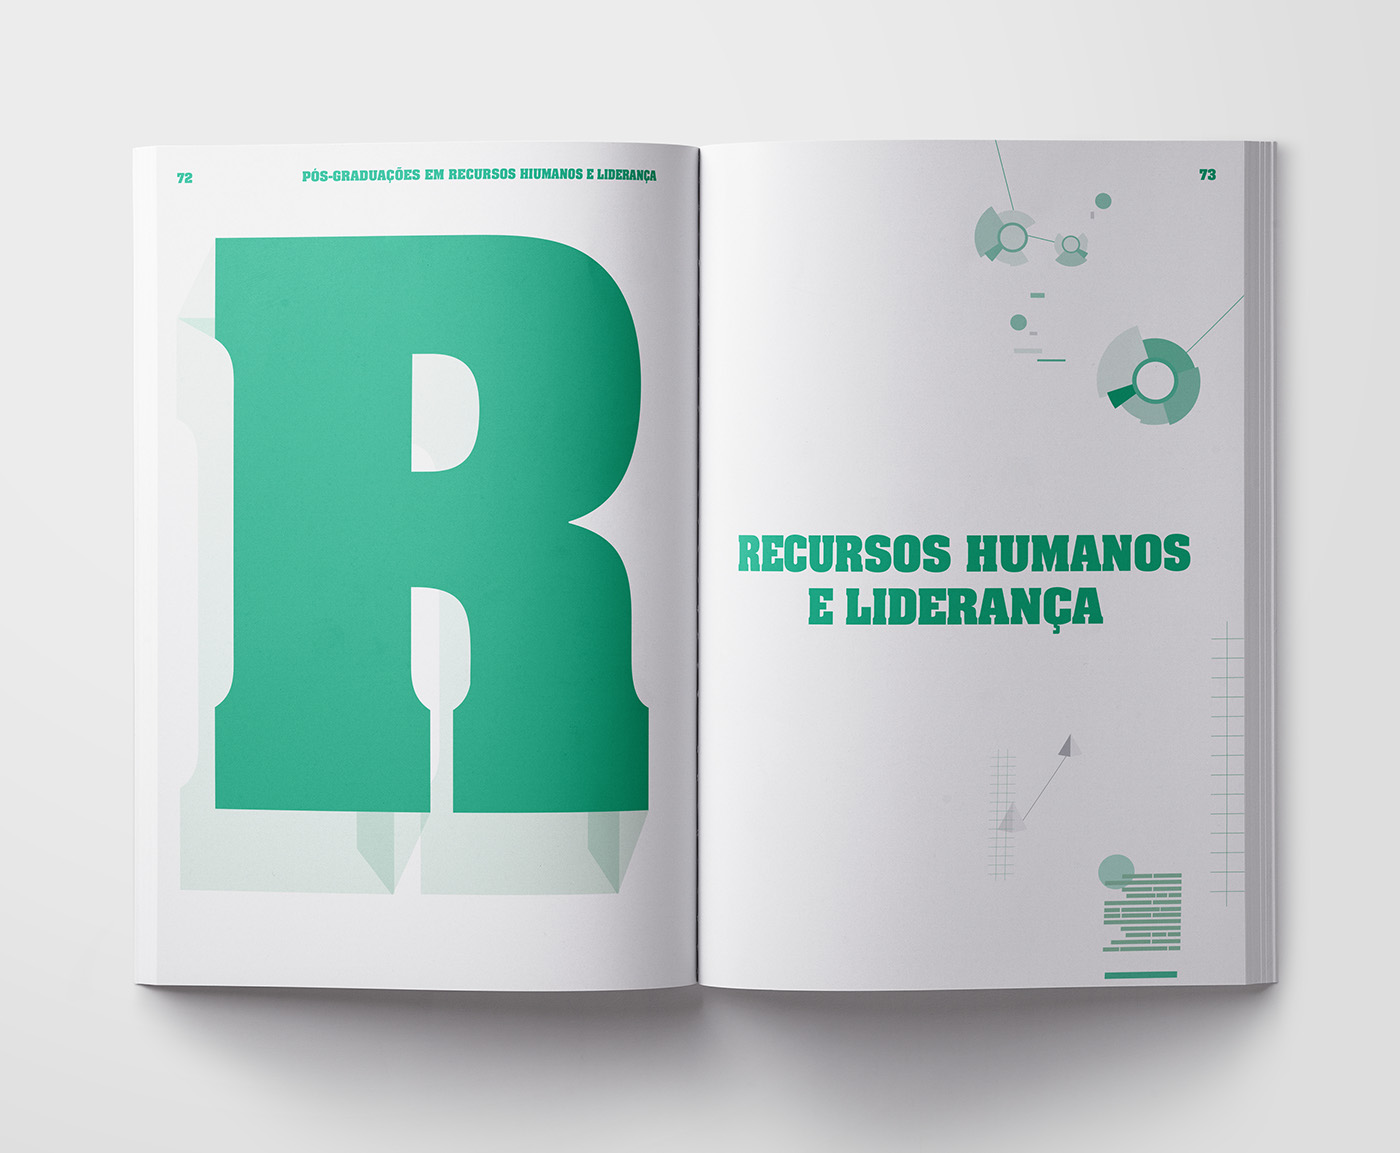 ISEG brochures University Lisbon editorial graphic design  Students economics management